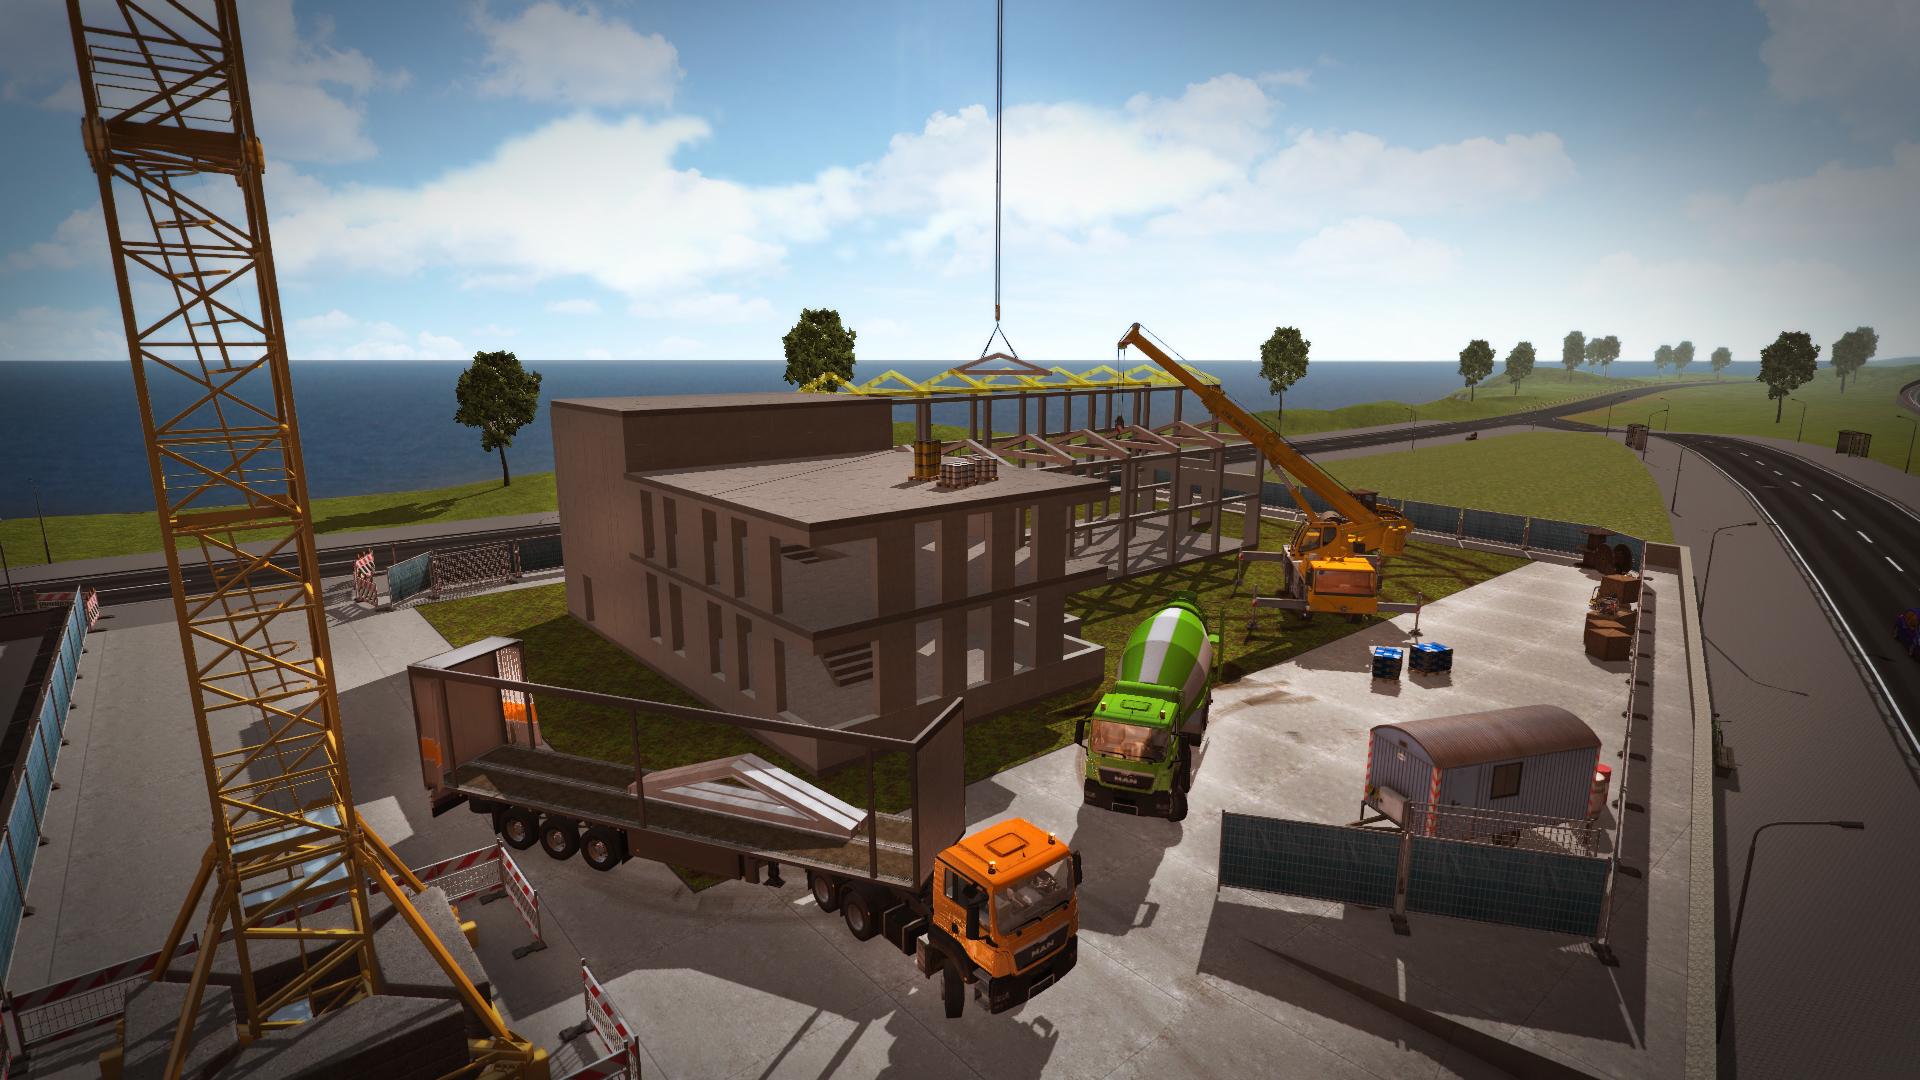 Screenshot №2 from game Construction Simulator 2015